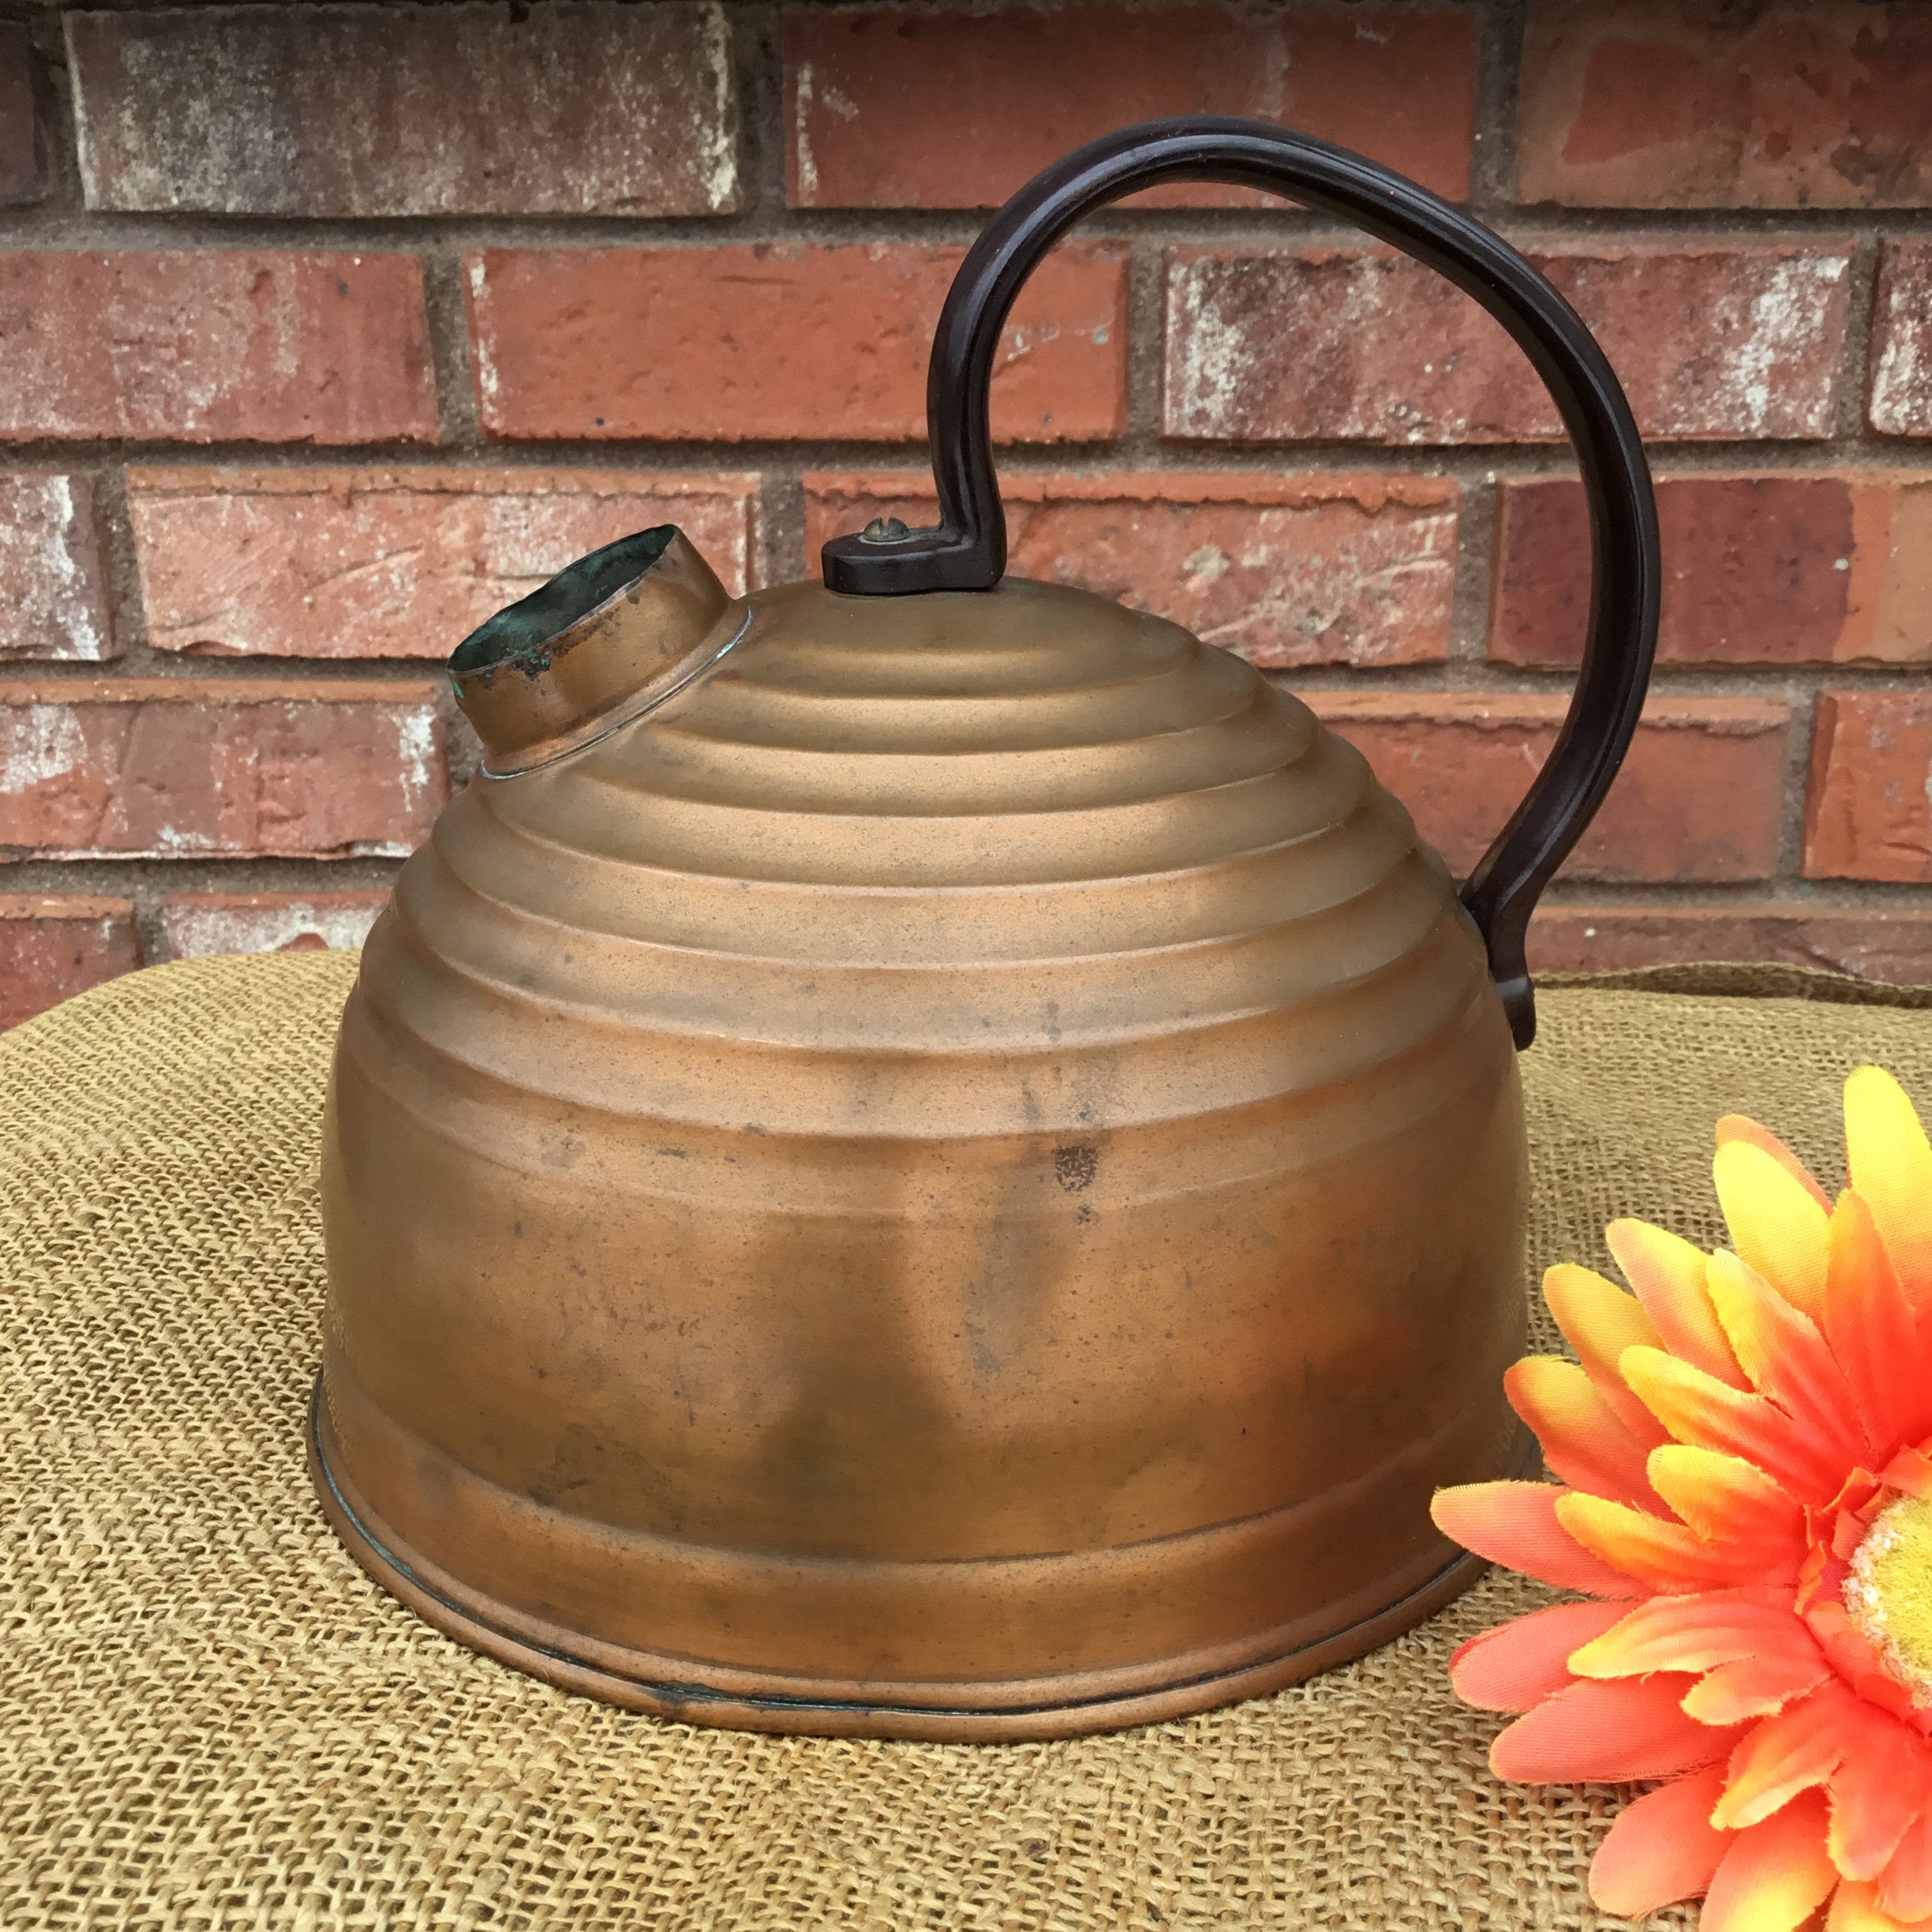 Vintage Taiwan Tea Kettle / Coffee Pot Cast Iron Swivel Lid With Bail Handle